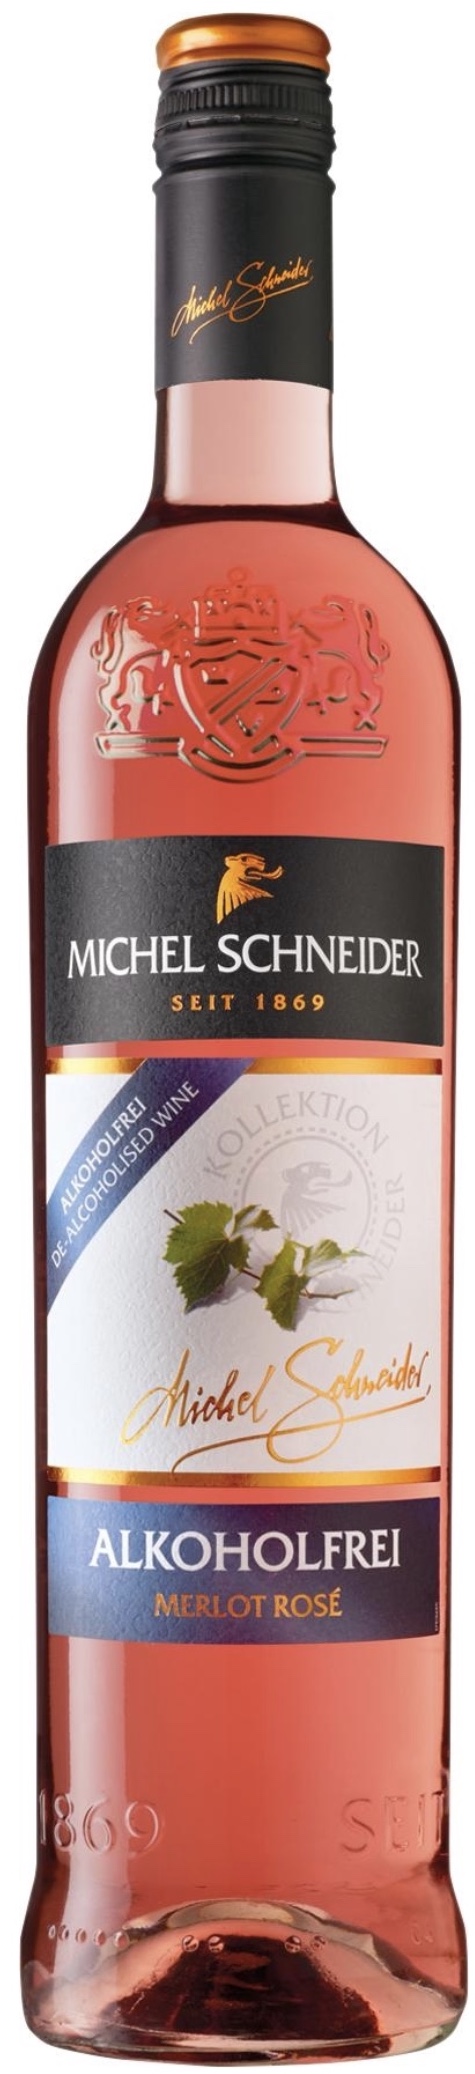 Michel Schneider Merlot Rosé alkoholfrei 0,3% vol. 0,75L